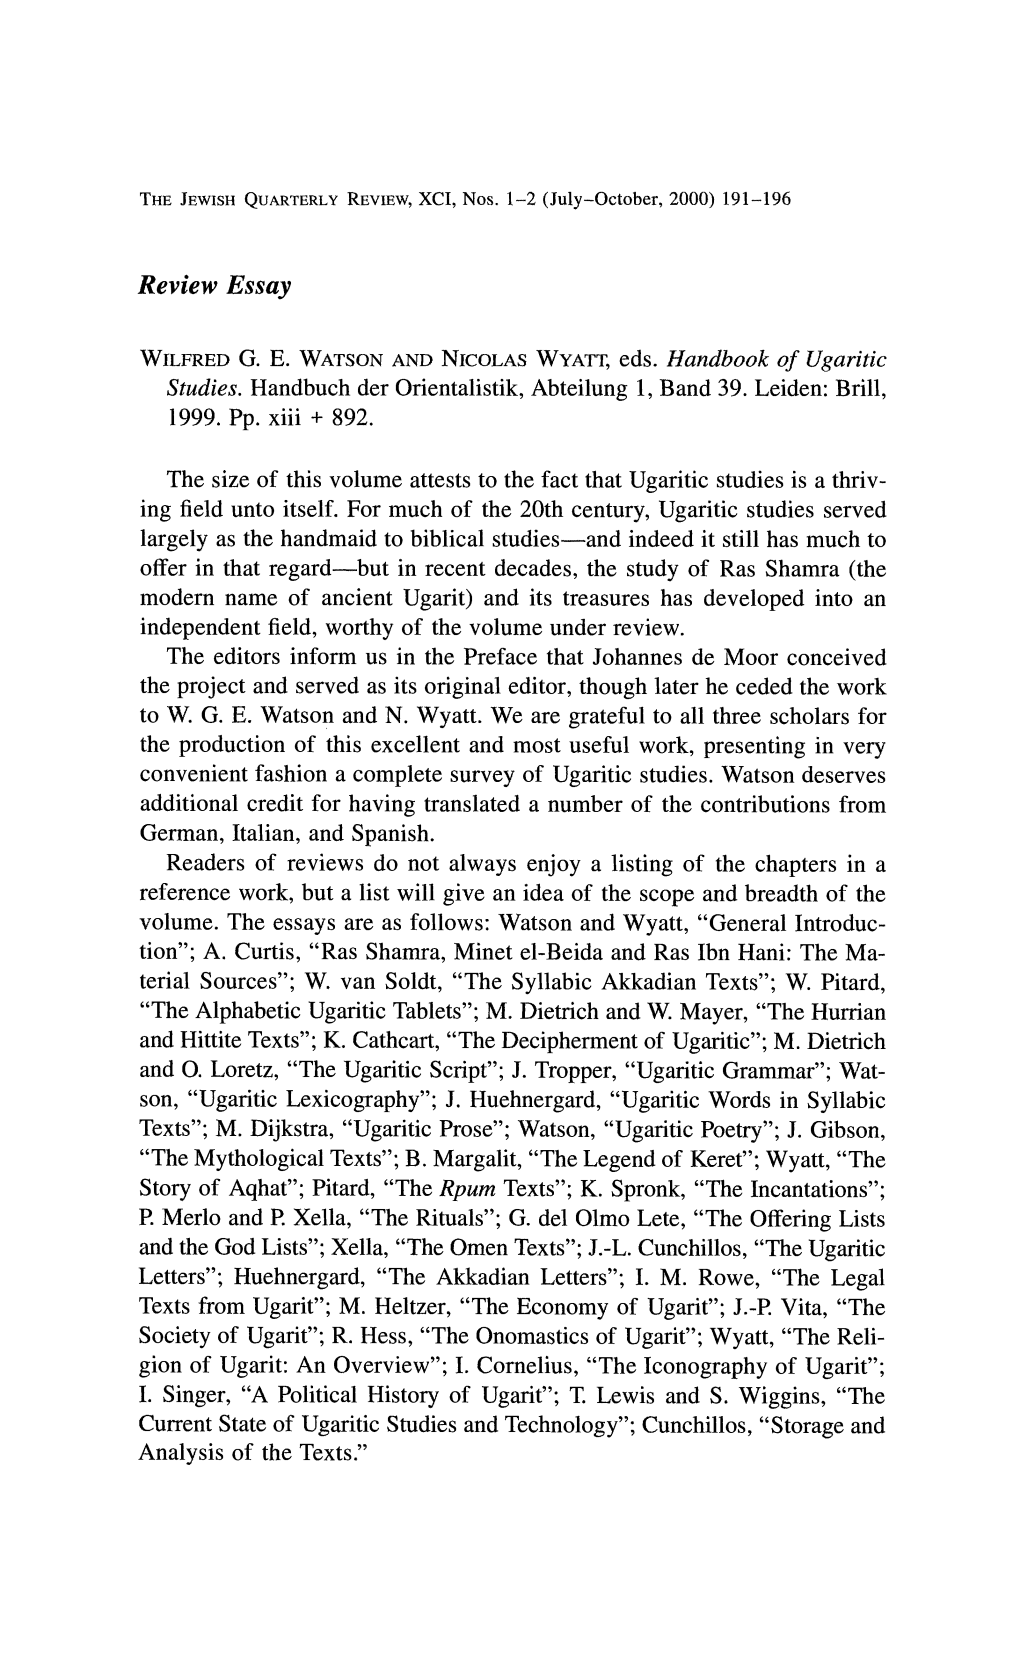 &lt;Product&gt; &lt;Article-Title&gt;Handbook of Ugaritic Studies&lt;/Article-Title